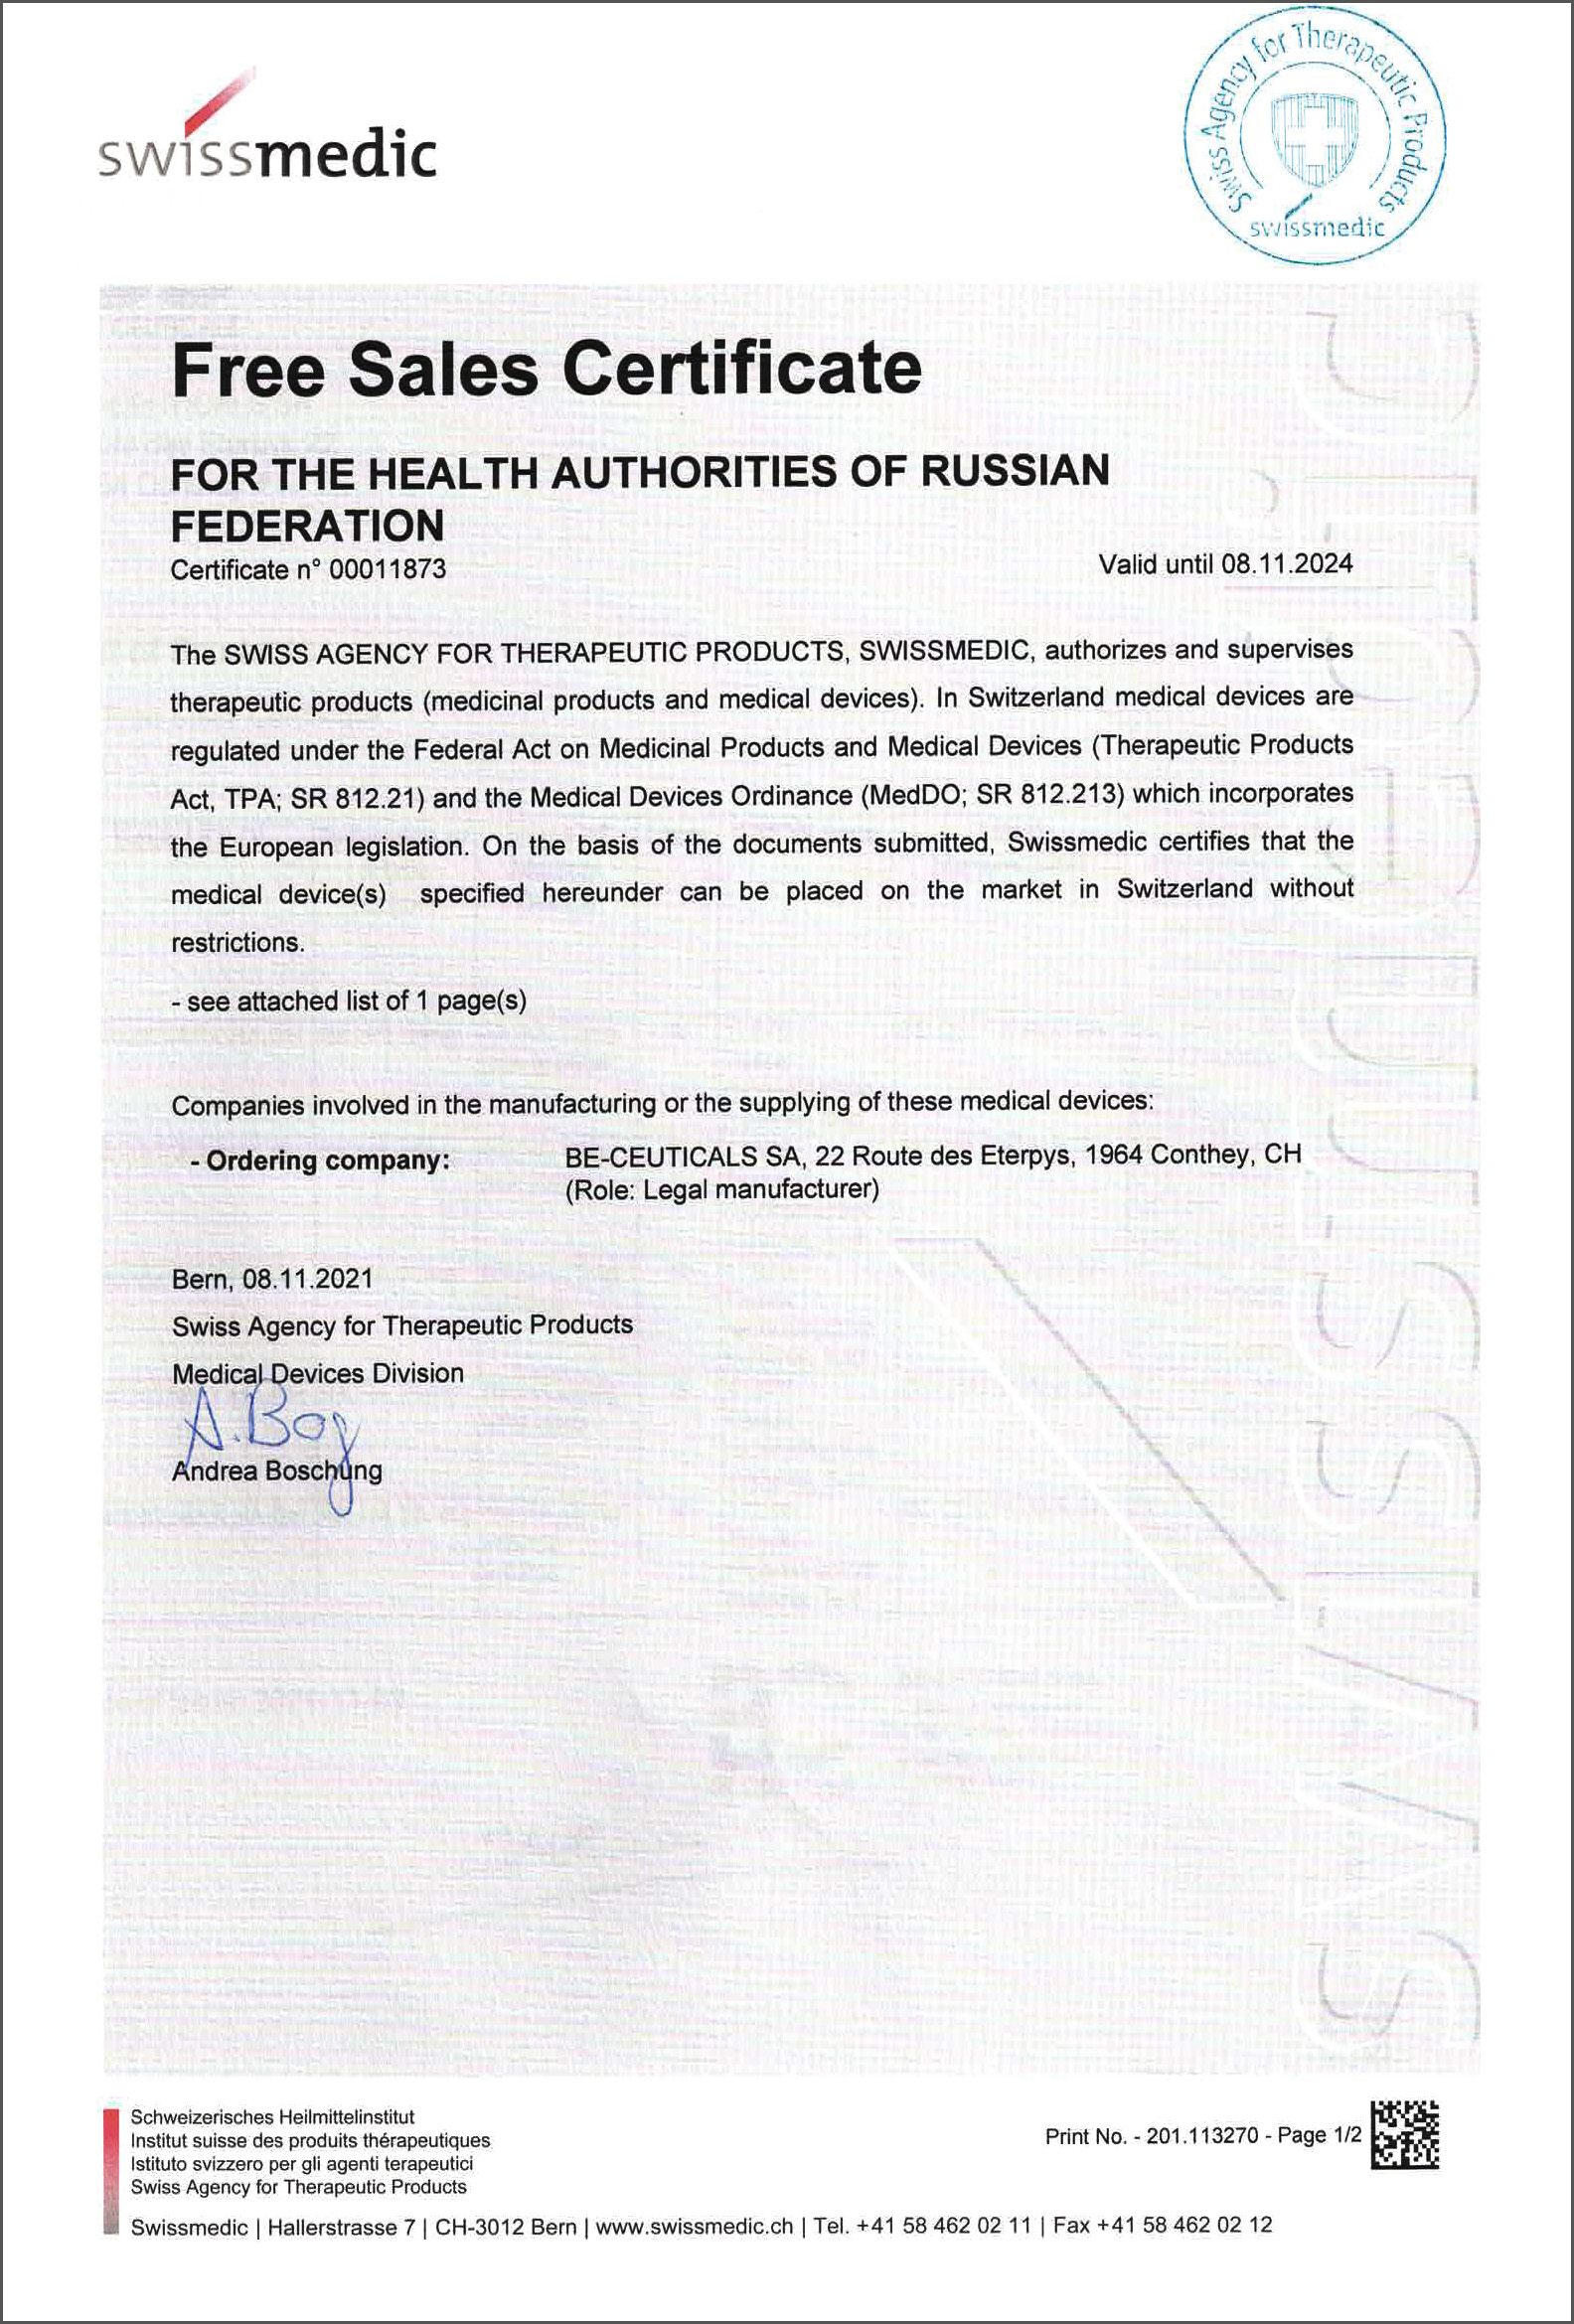 Swissmedic - Free Sales Certificate - Russian Federation